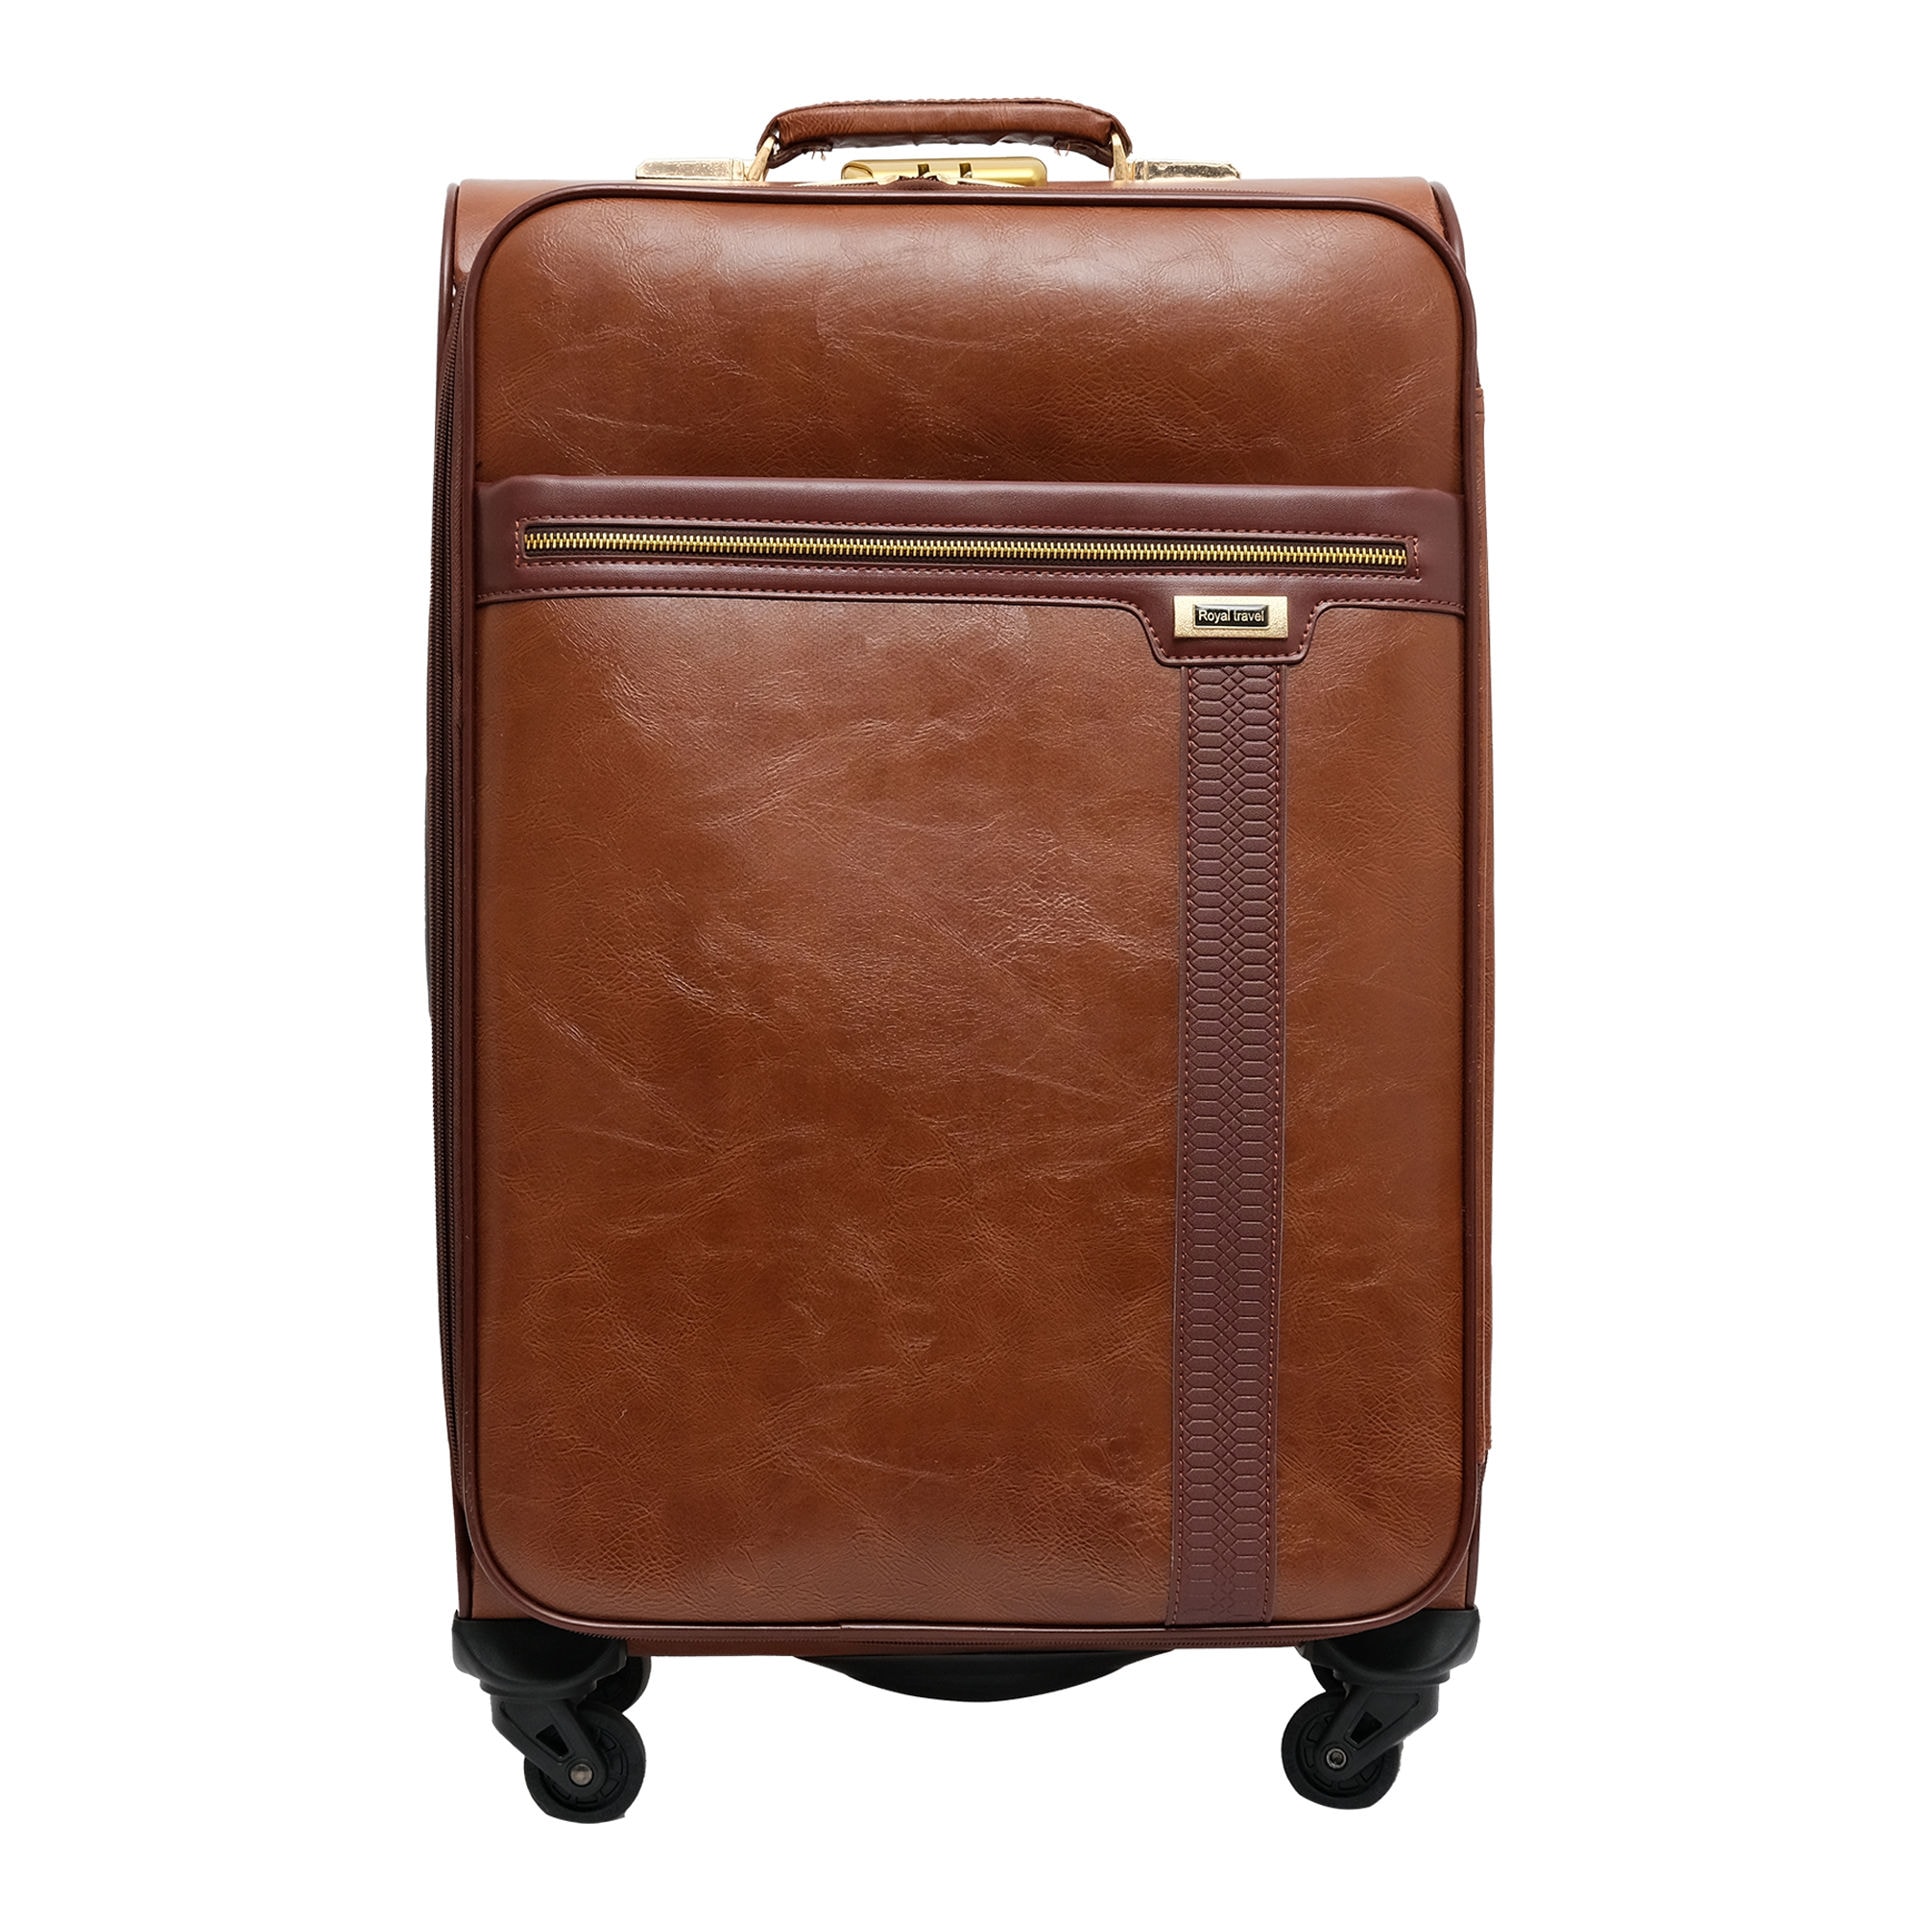 royal travel bag leather